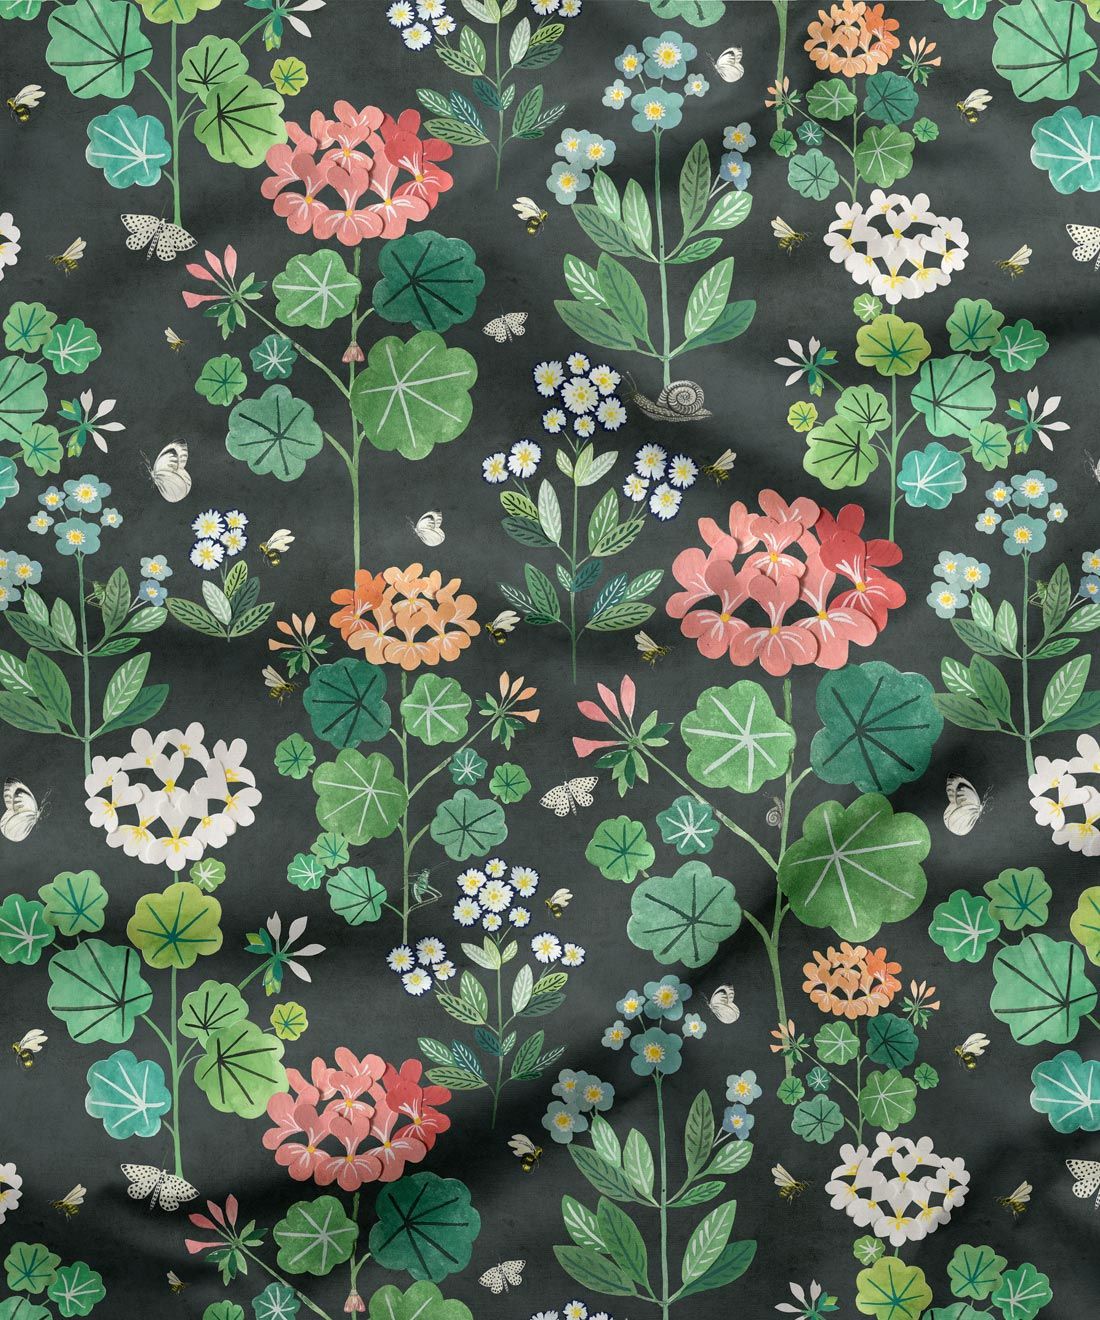 Sophie’s Garden Fabric